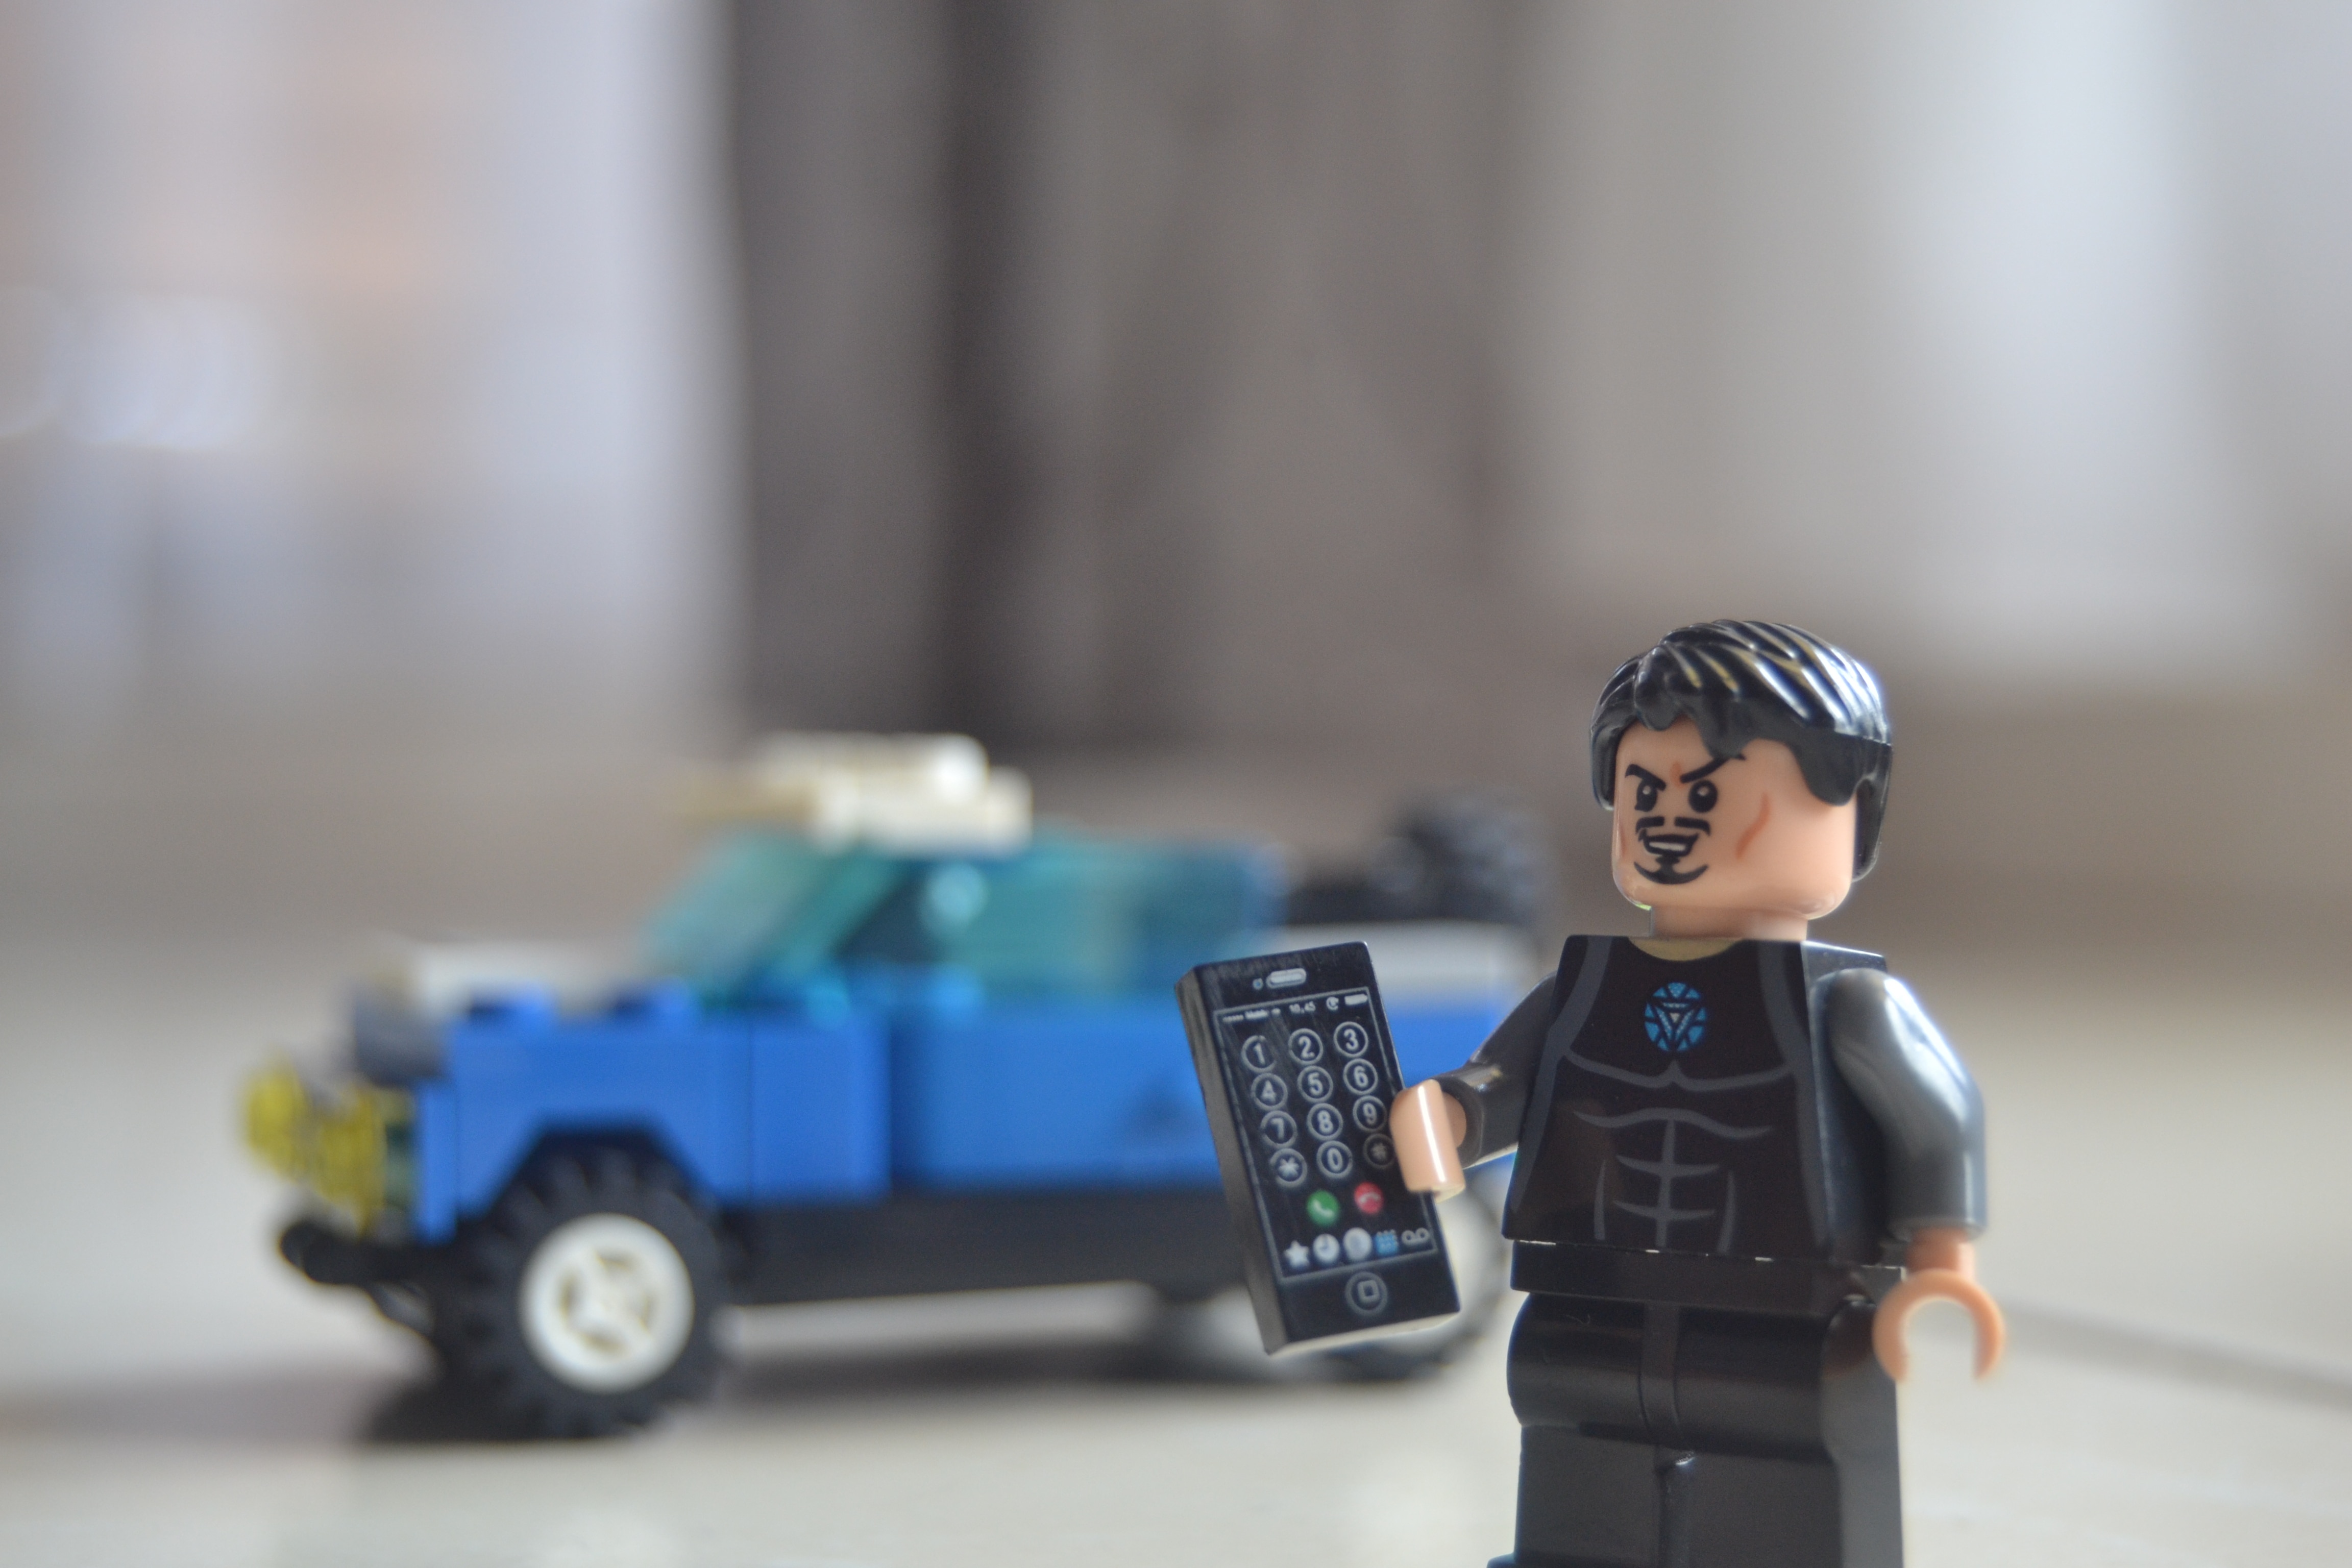 lego toy action figure holding remote next to blue lego vehicle